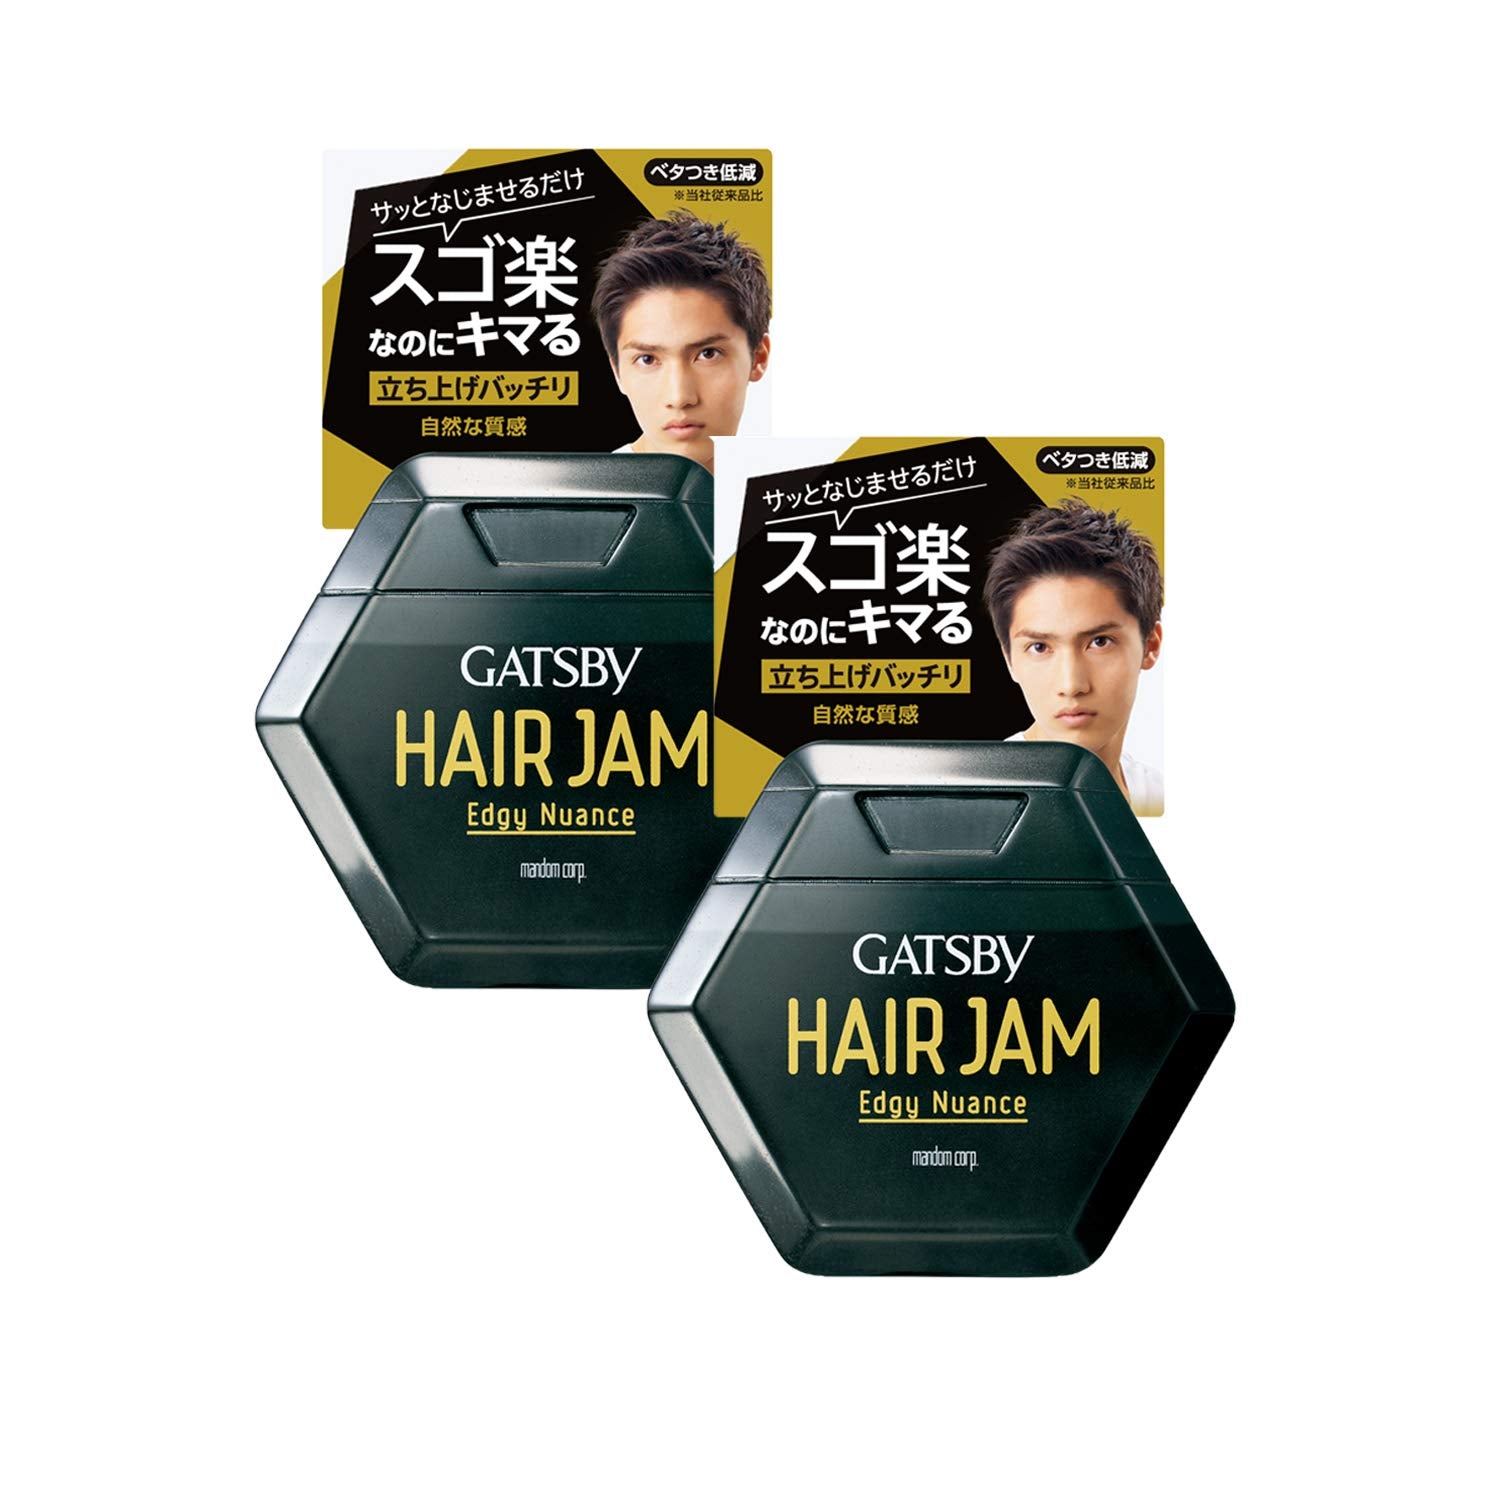 GATSBY Hair Jam Edge Nuance Men's Styling Gel Wax Set 110ml